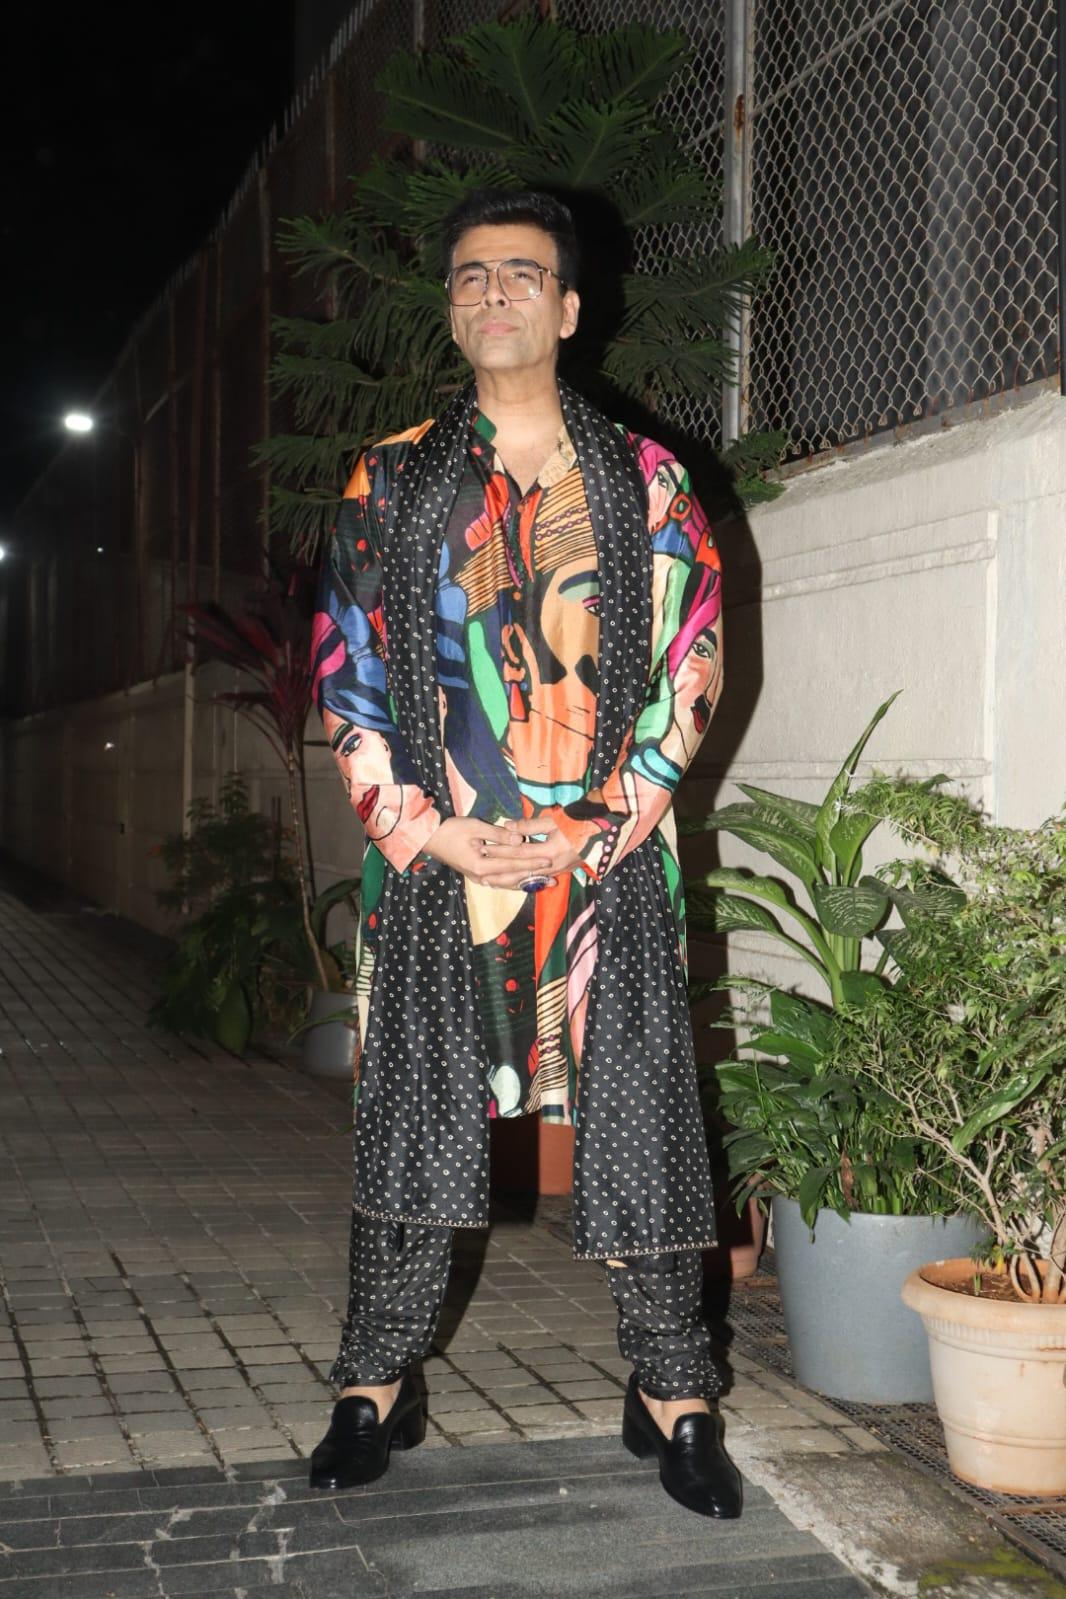 Karan Johar arrived at the venue for the Diwali bash in a colourful sherwani set